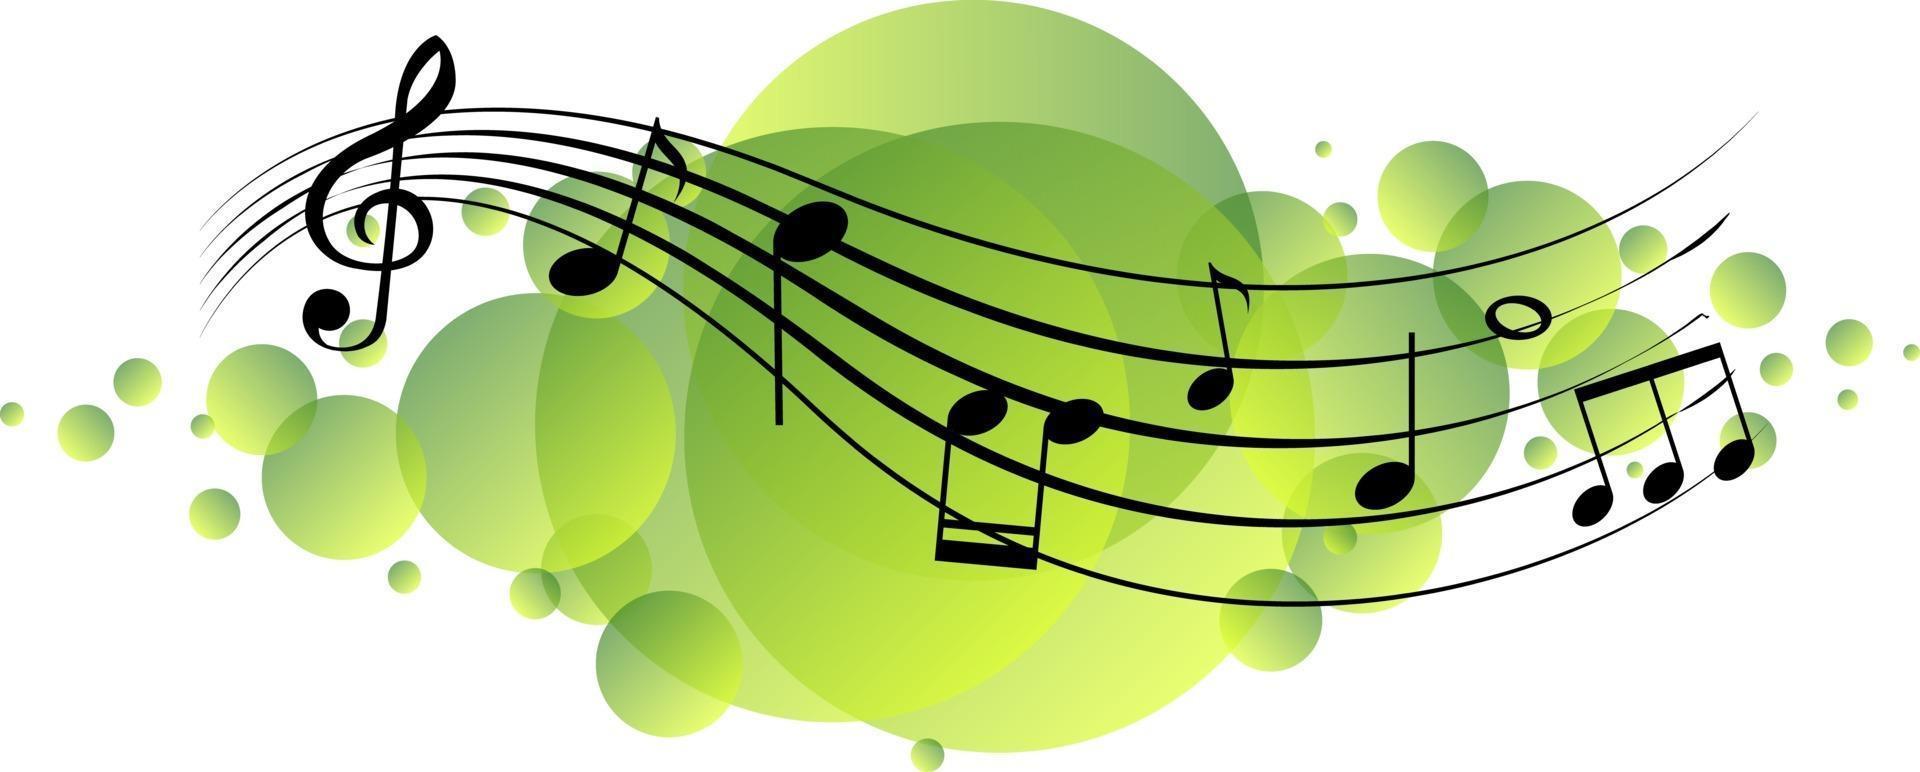 Musical melody symbols on green splotch vector